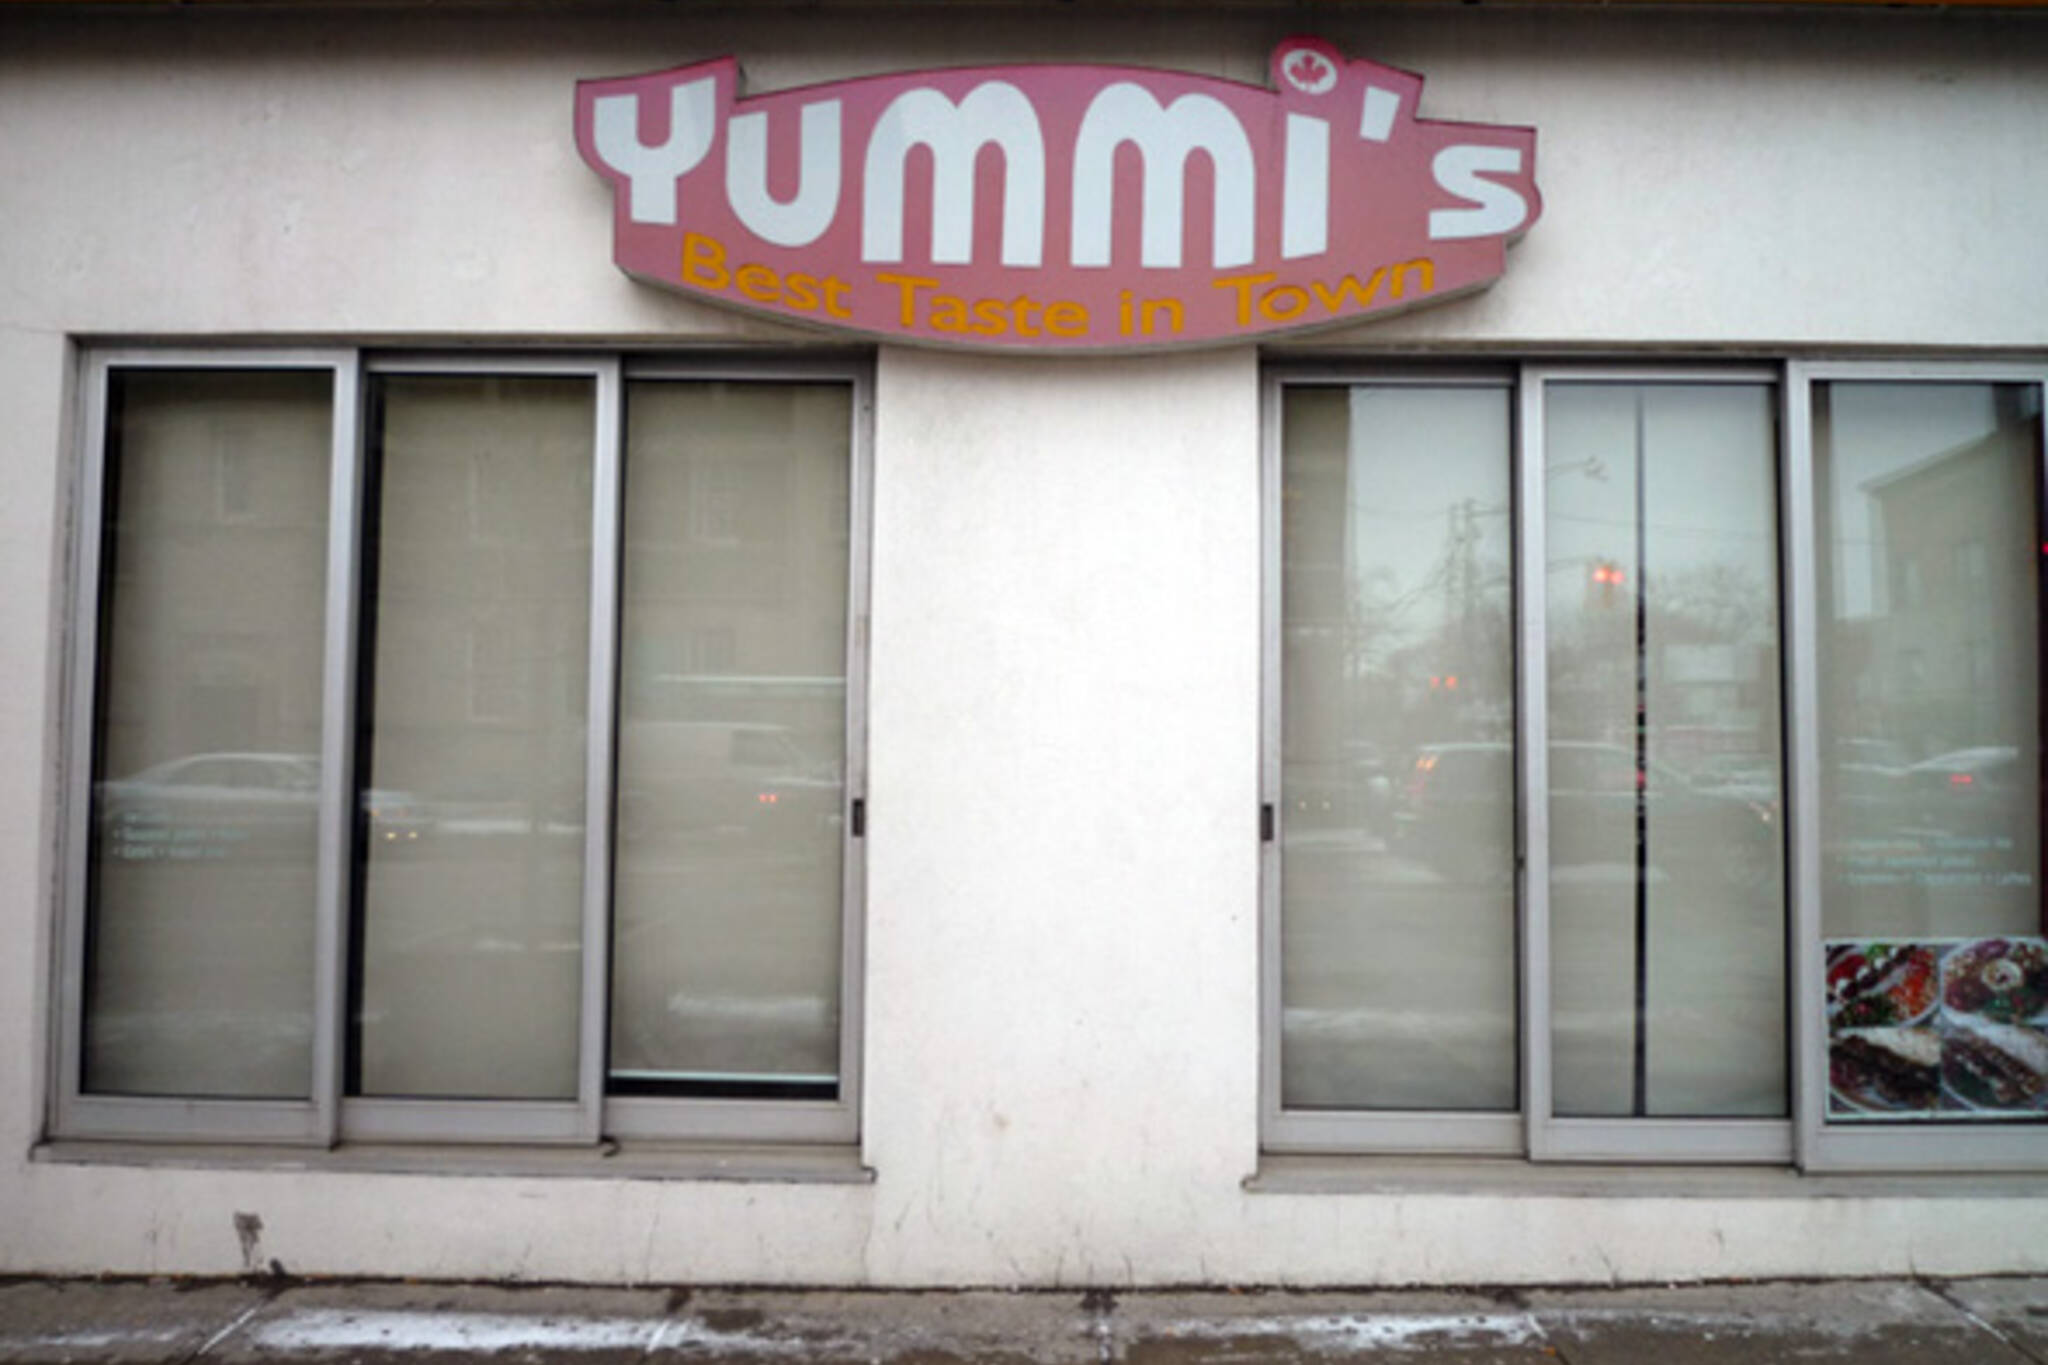 Yummis Toronto